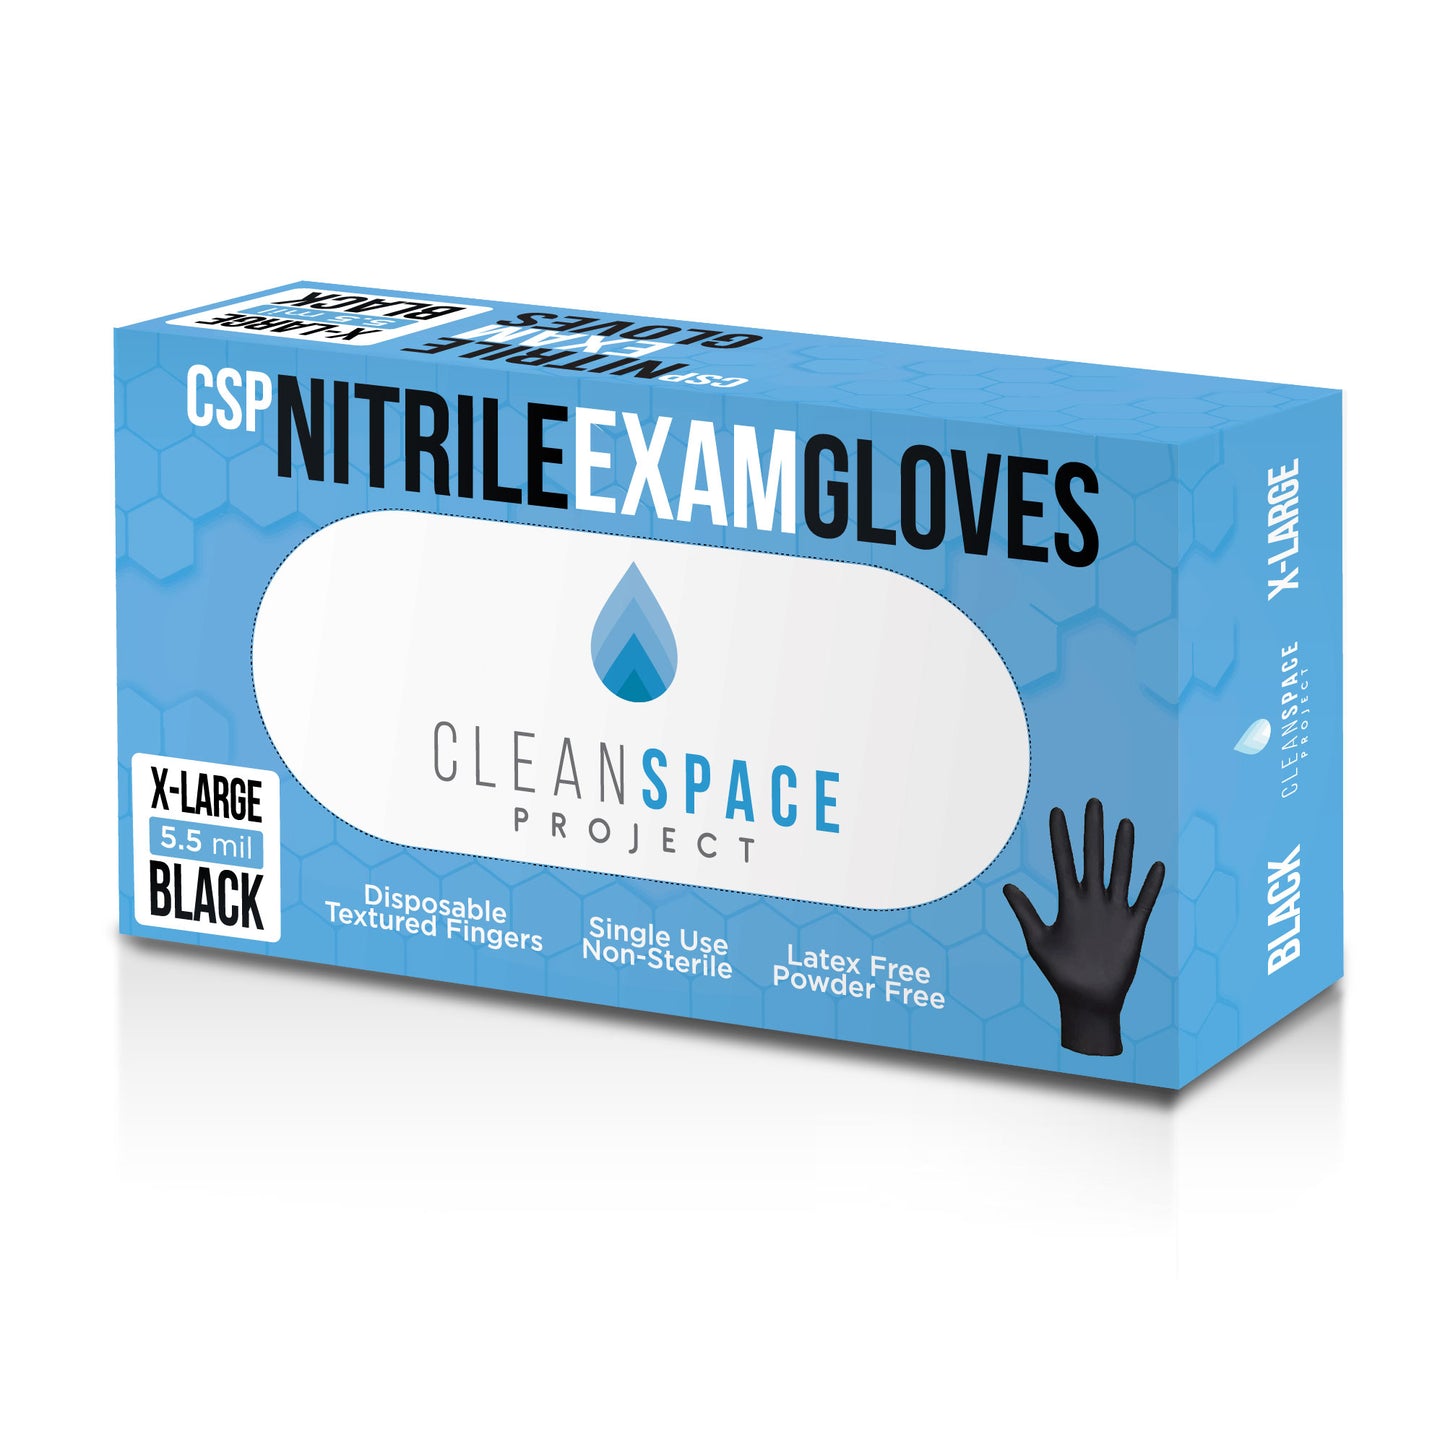 CSP Nitrile Gloves - 5.5 mil Black